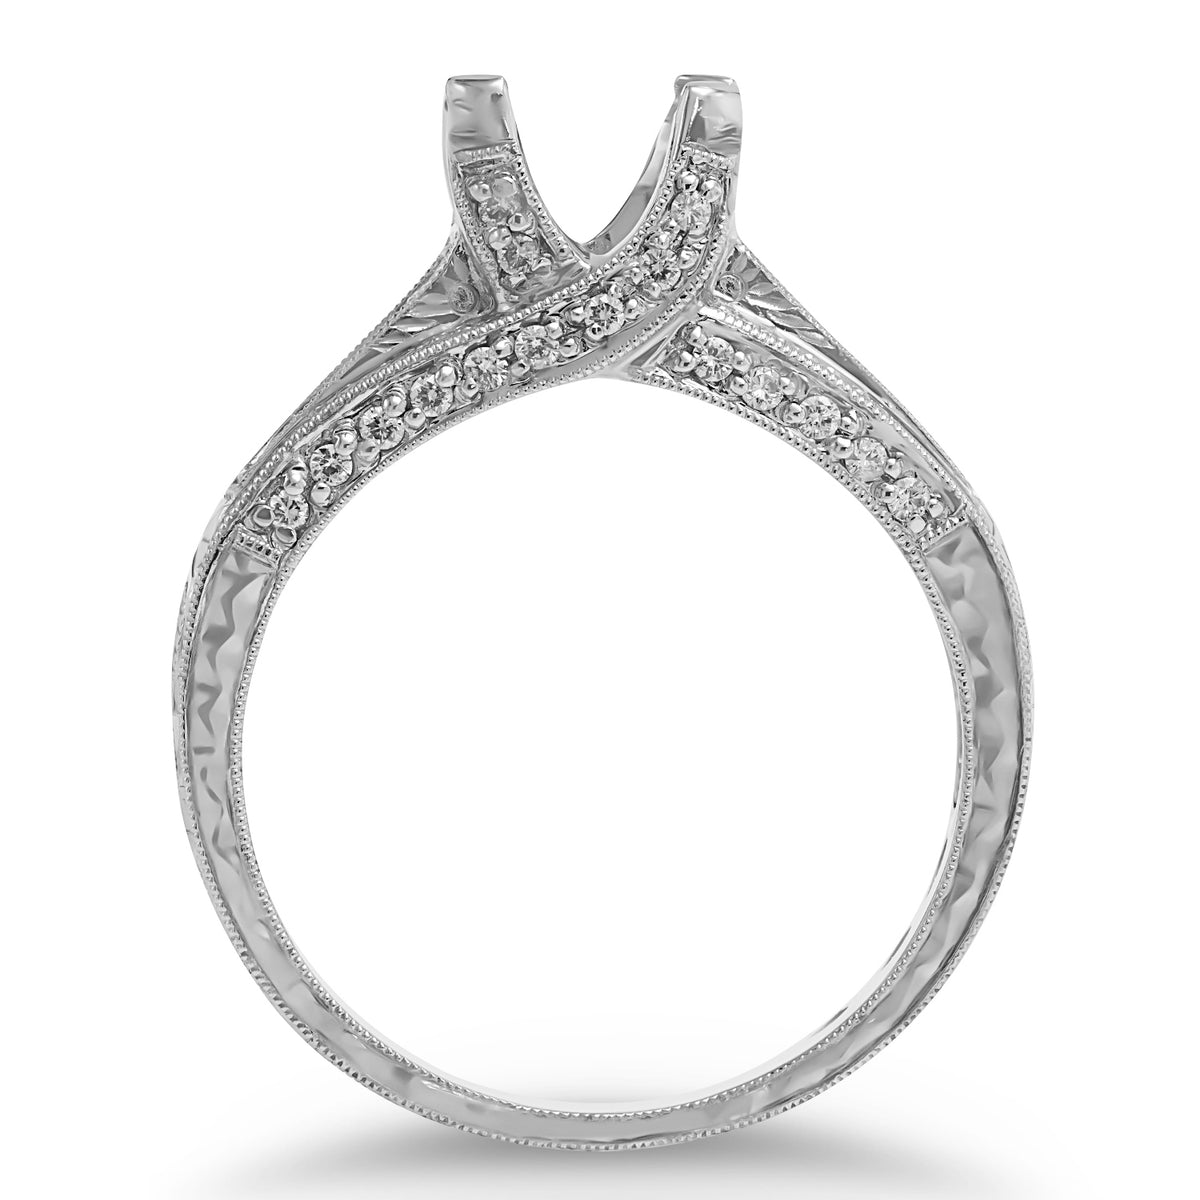 Engraved Princess-cut Diamond Semi-Mount Ring